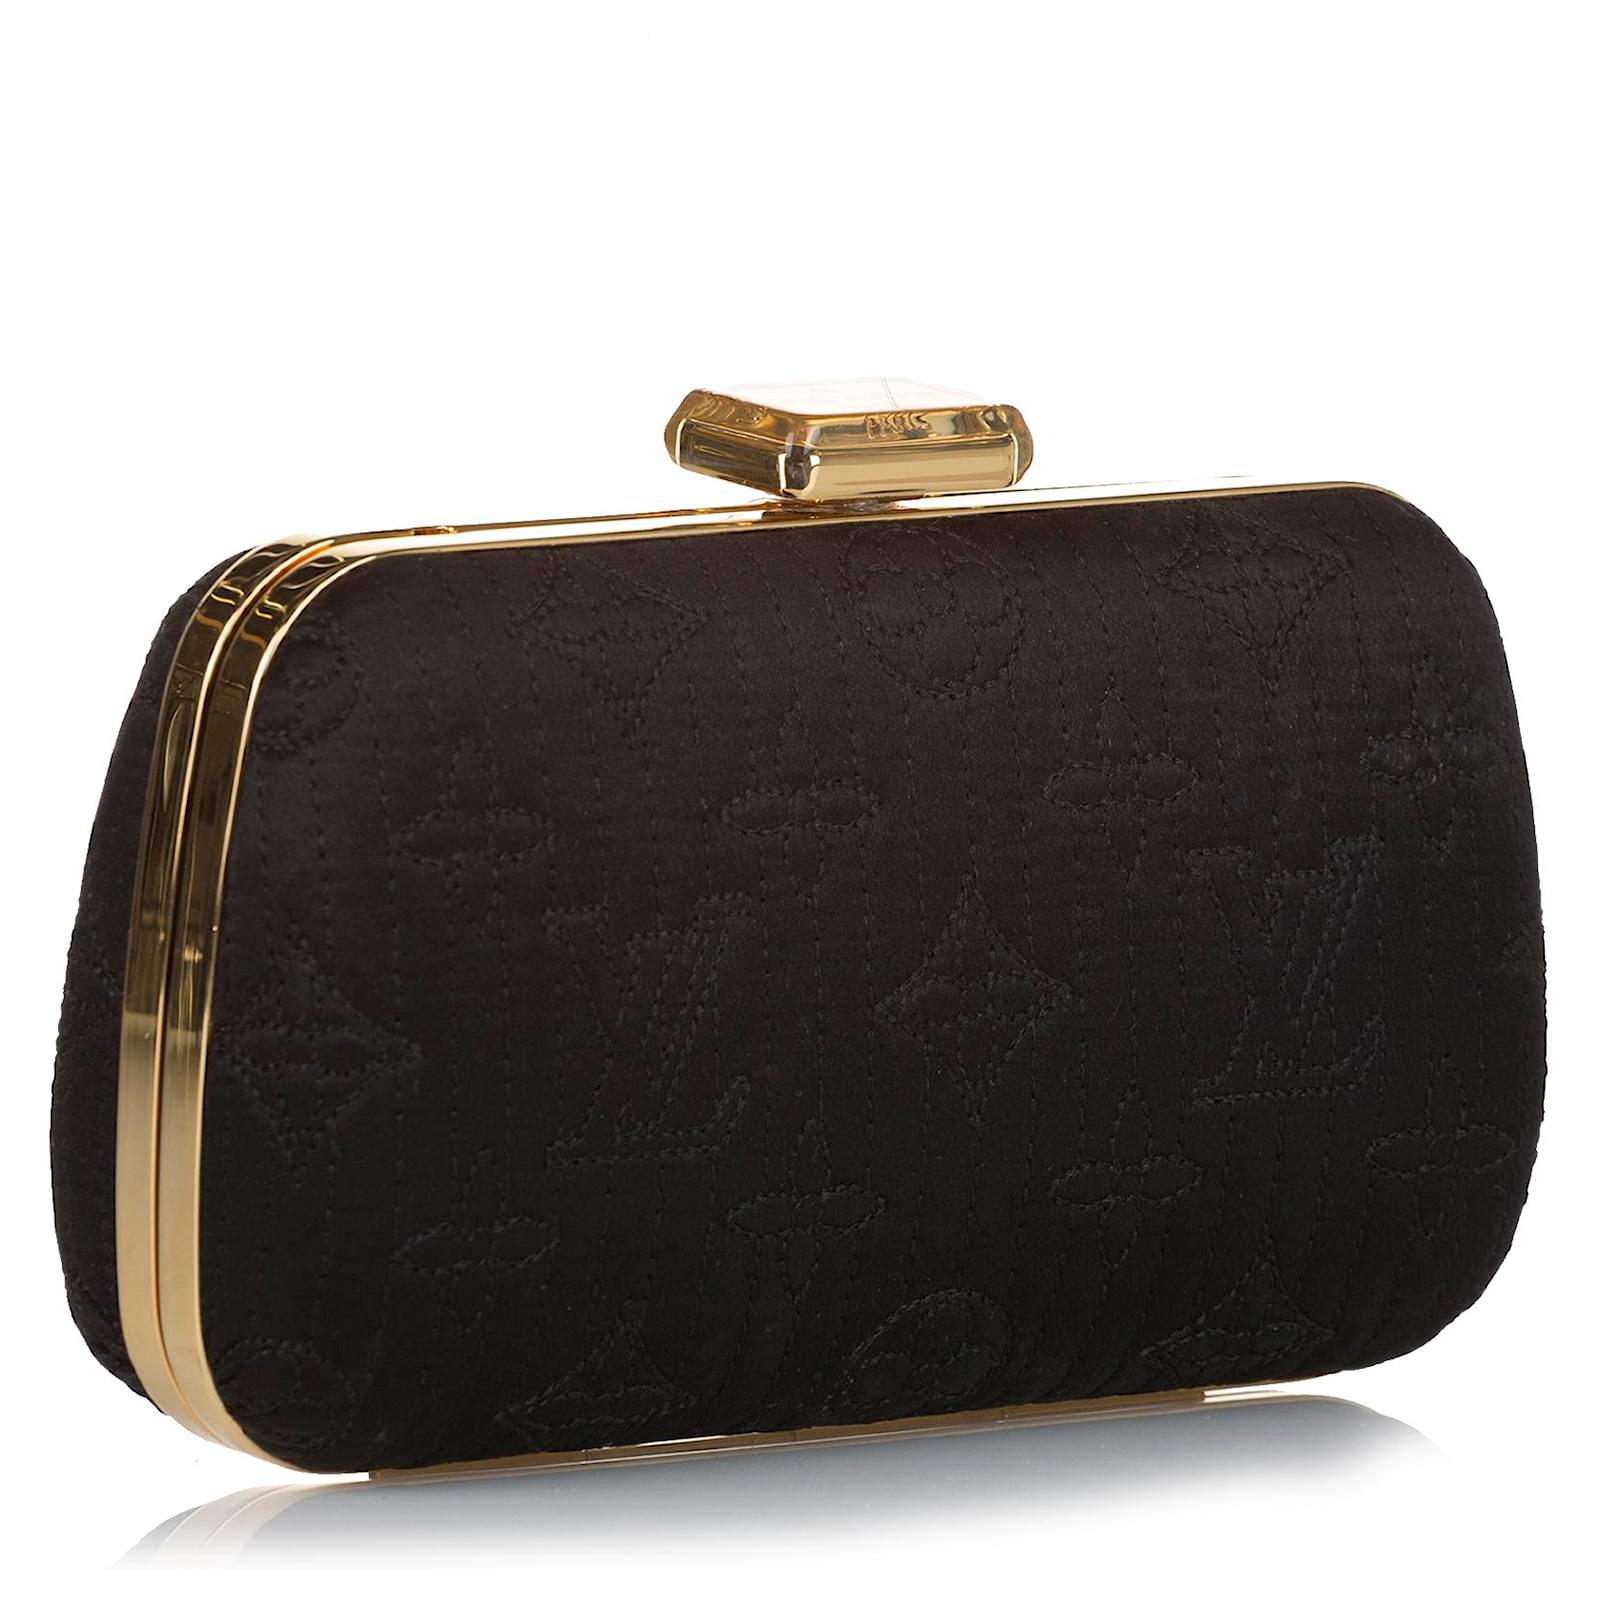 Louis Vuitton handbag clutch in grey monogram patent leather